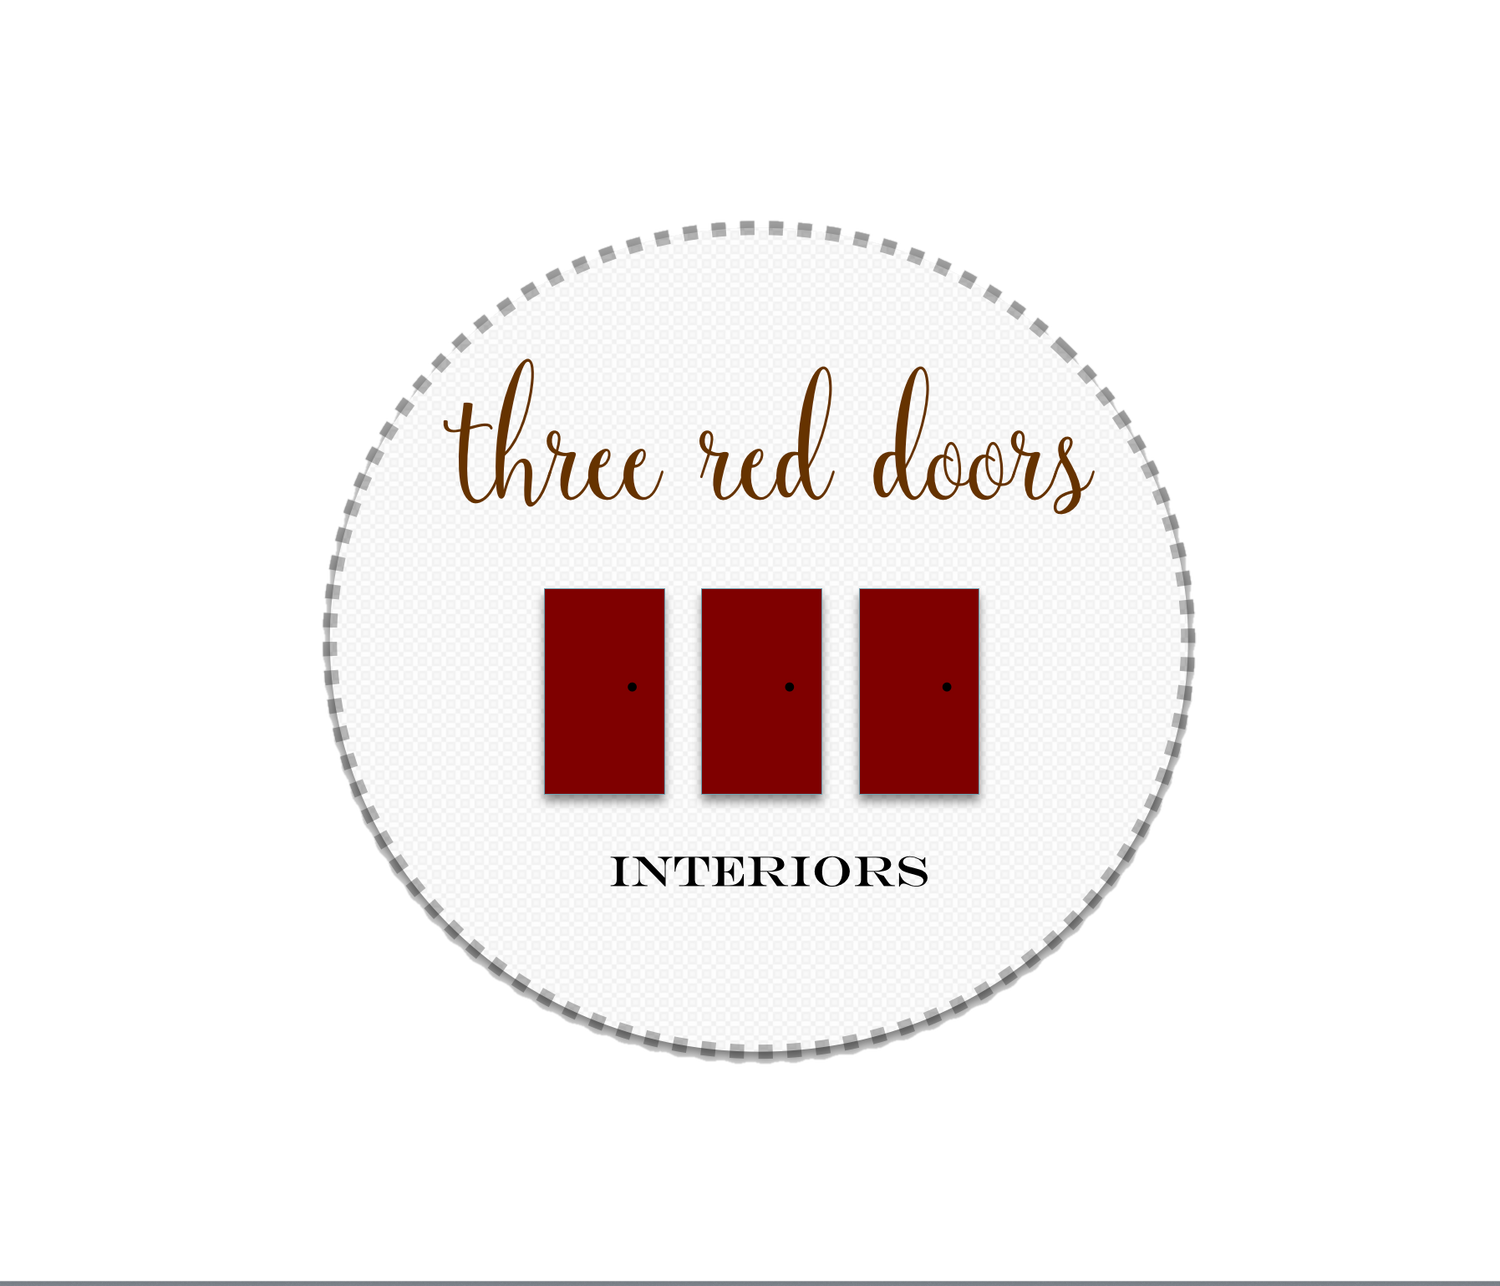 Three Red Doors